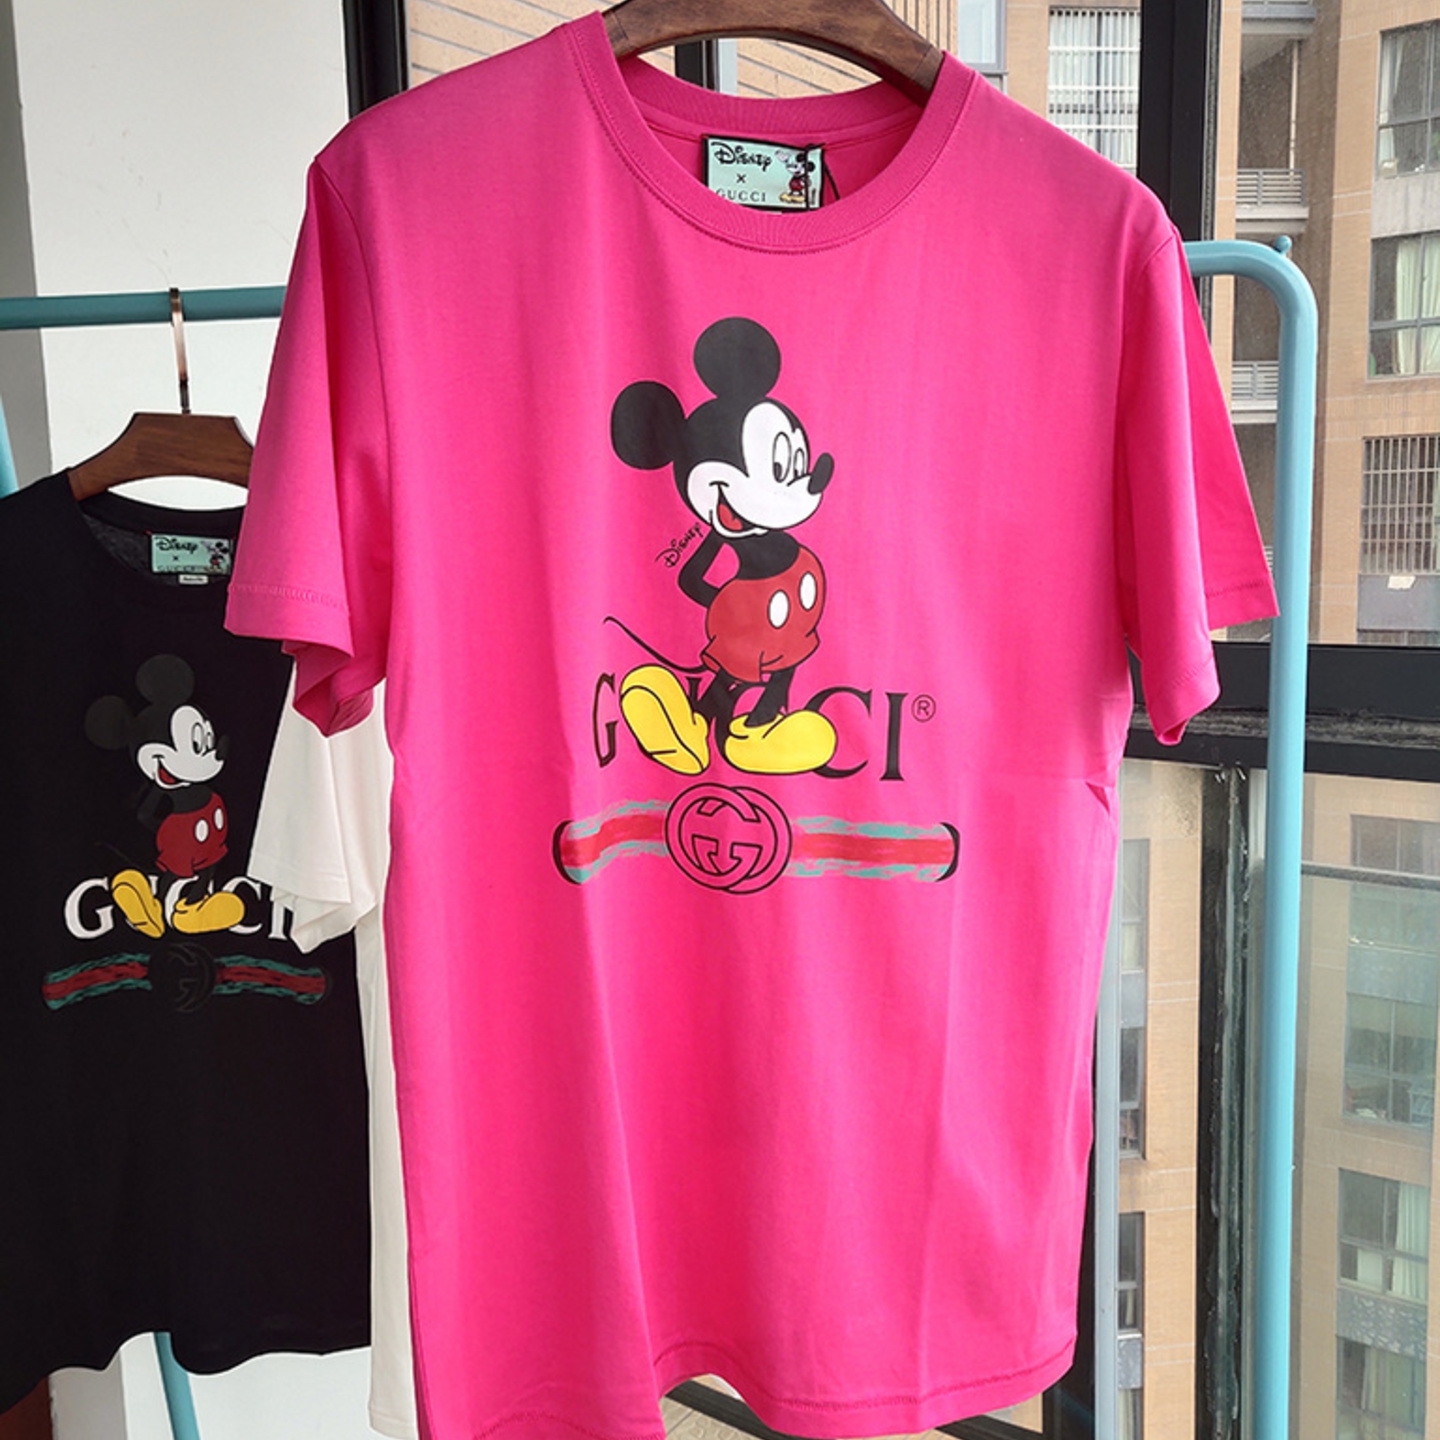  Gucci Disney x Gucci oversize T-shirt